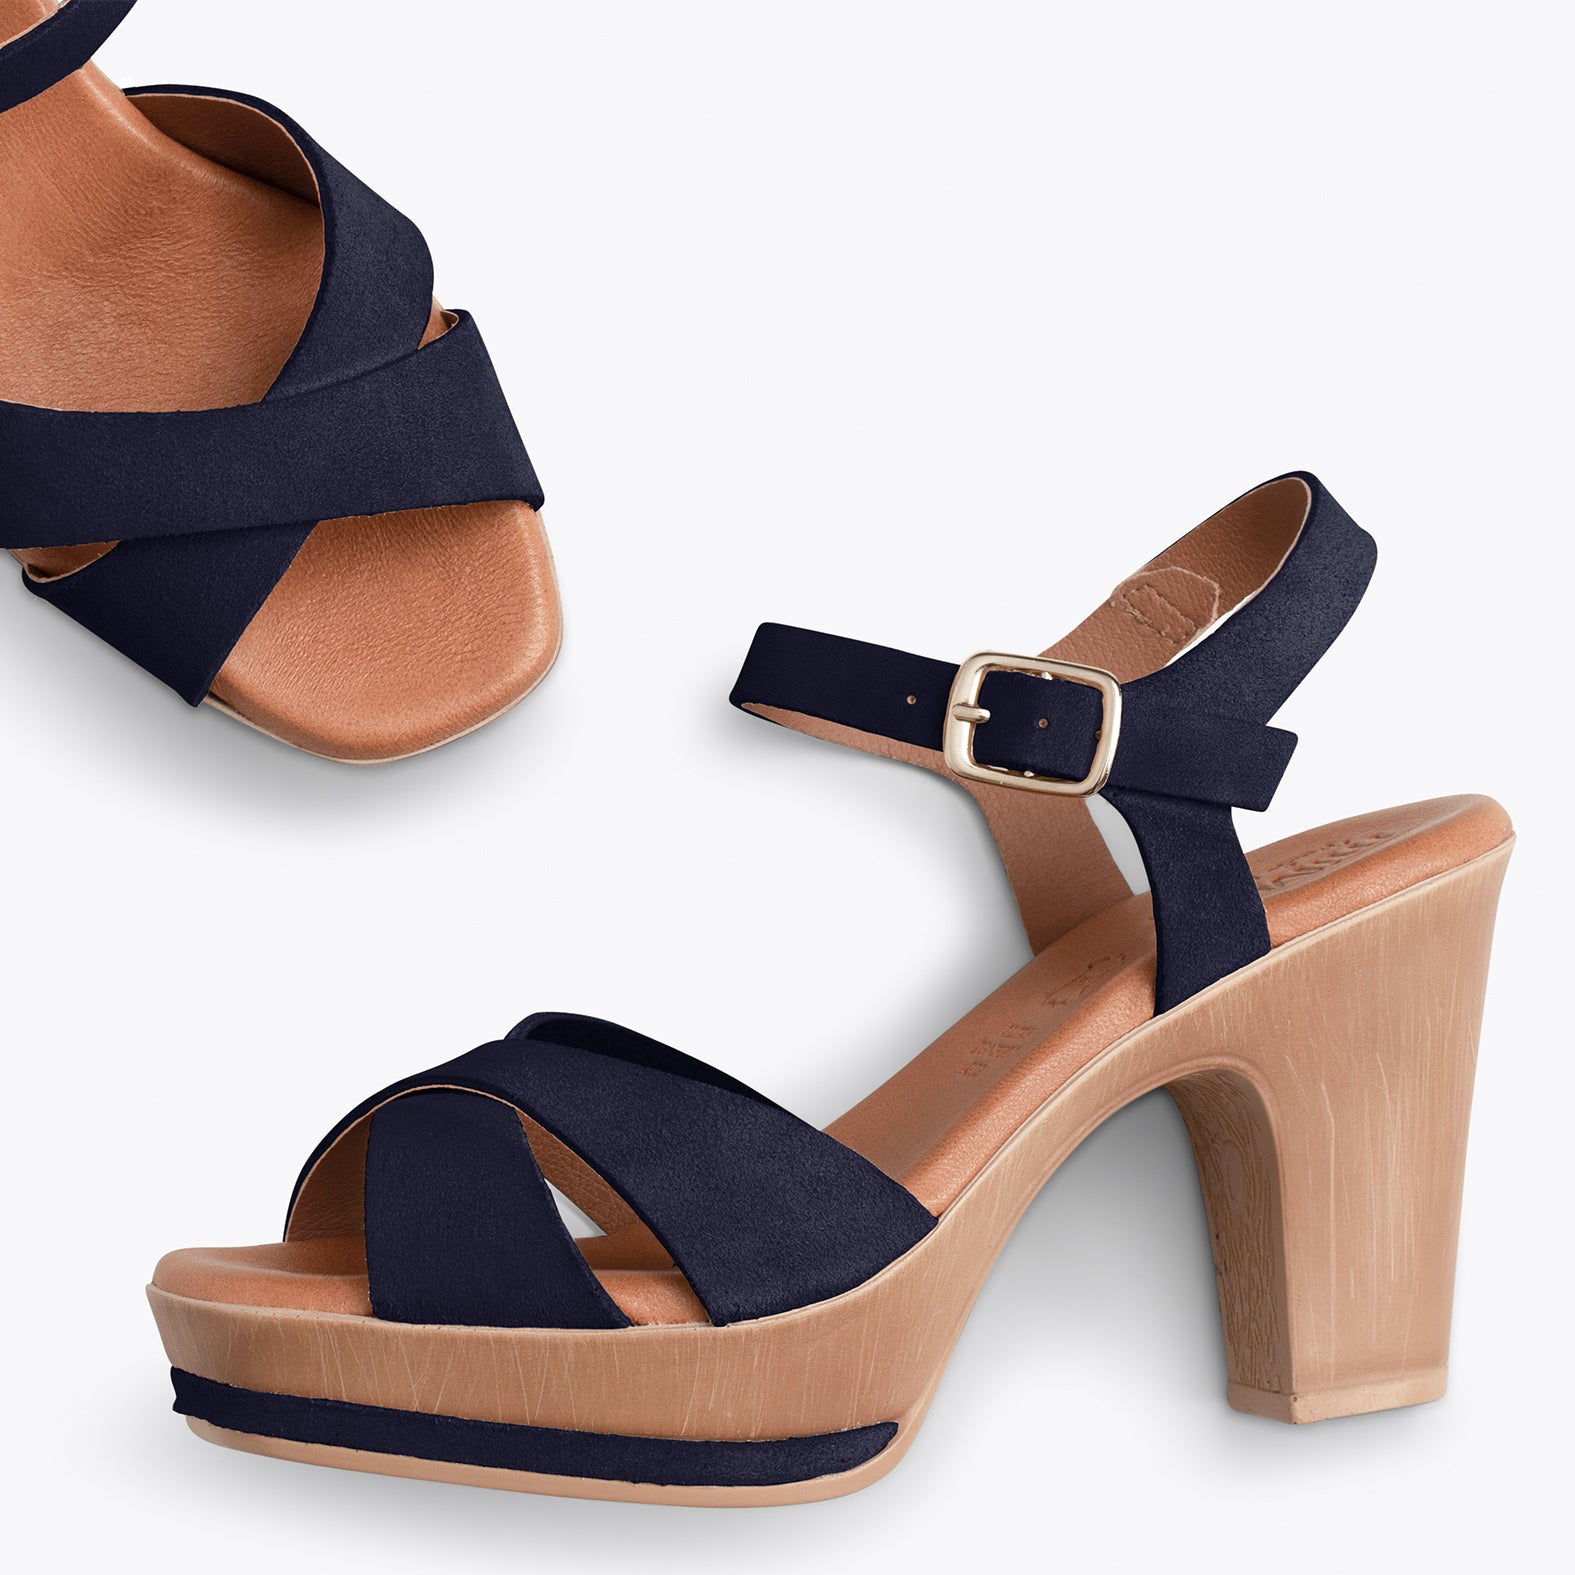 MYKONOS – NAVY high heel sandals with platform